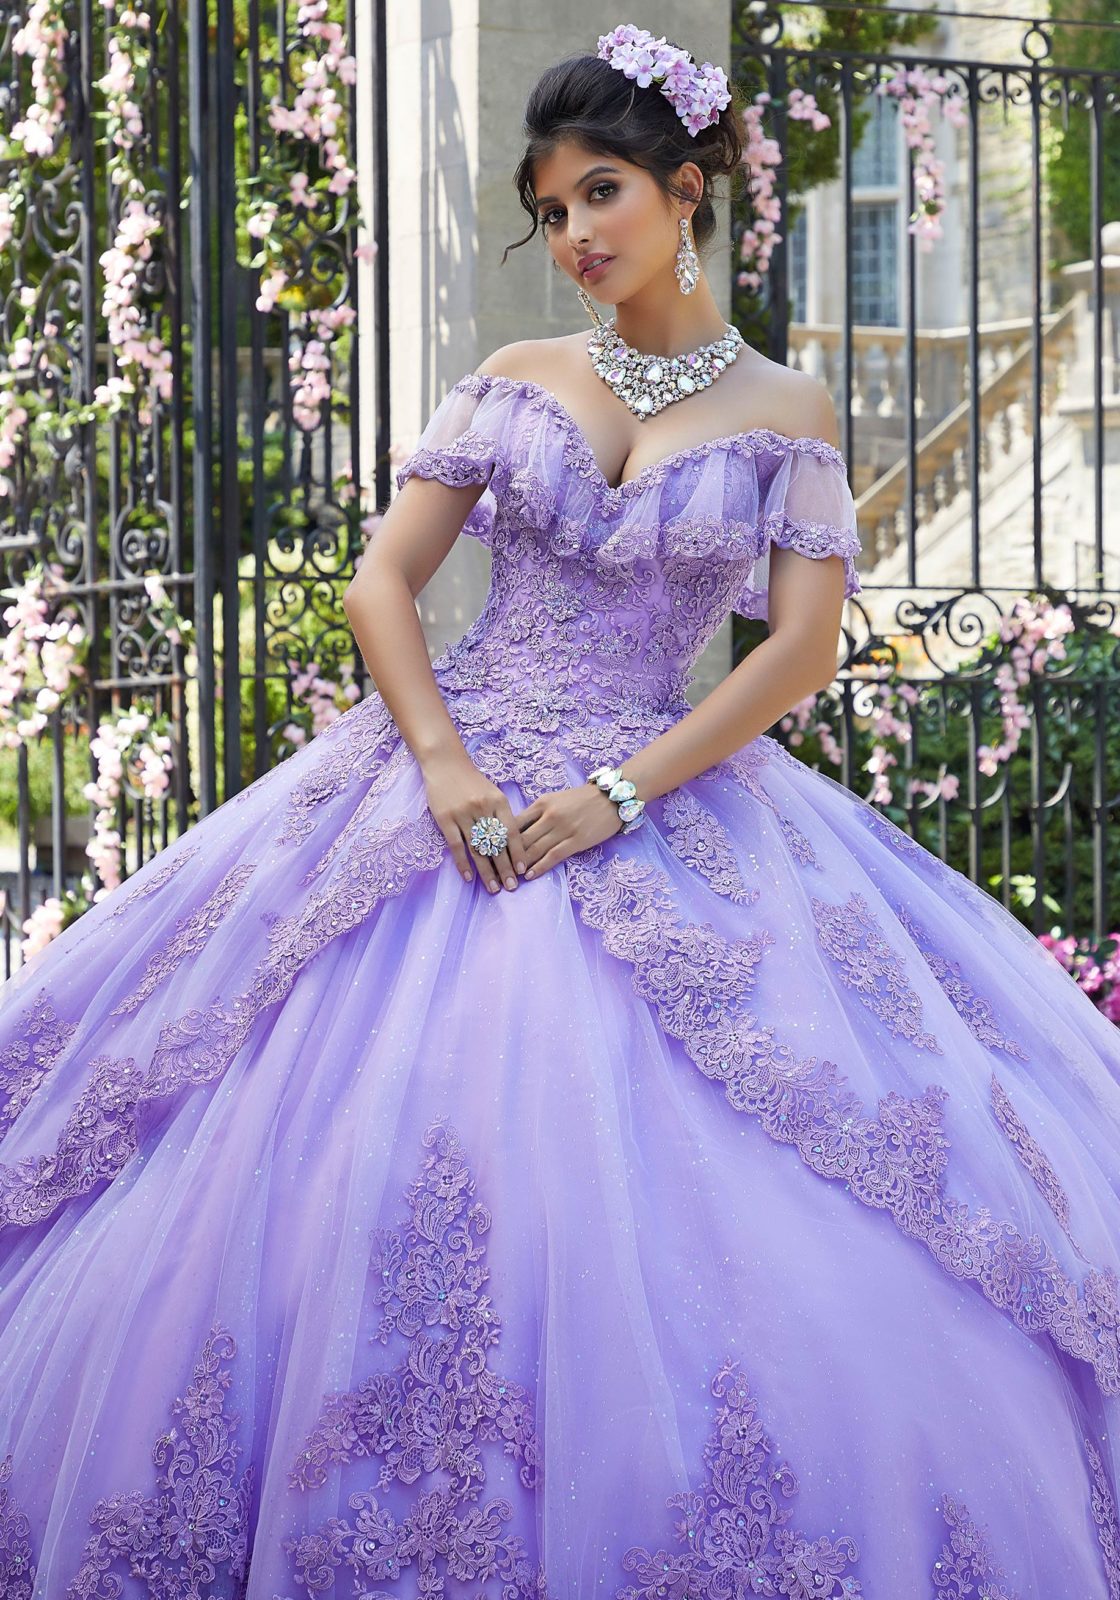 Princess Tulle and Glitter Tulle Quinceañera Dress #34025